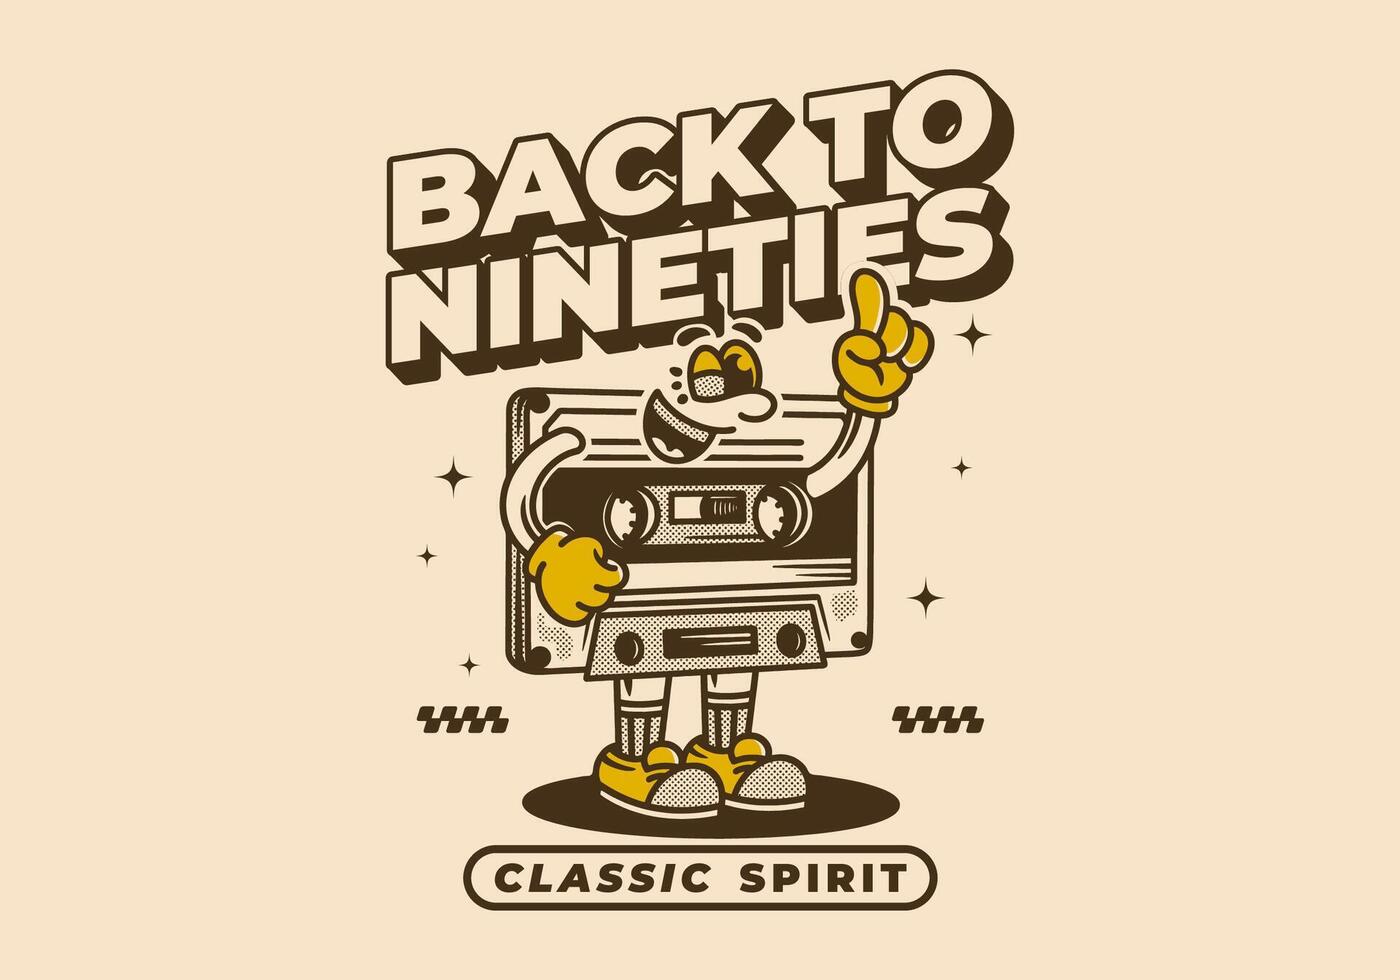 Back to nineties. Vintage character illustration of Tape cassette vector